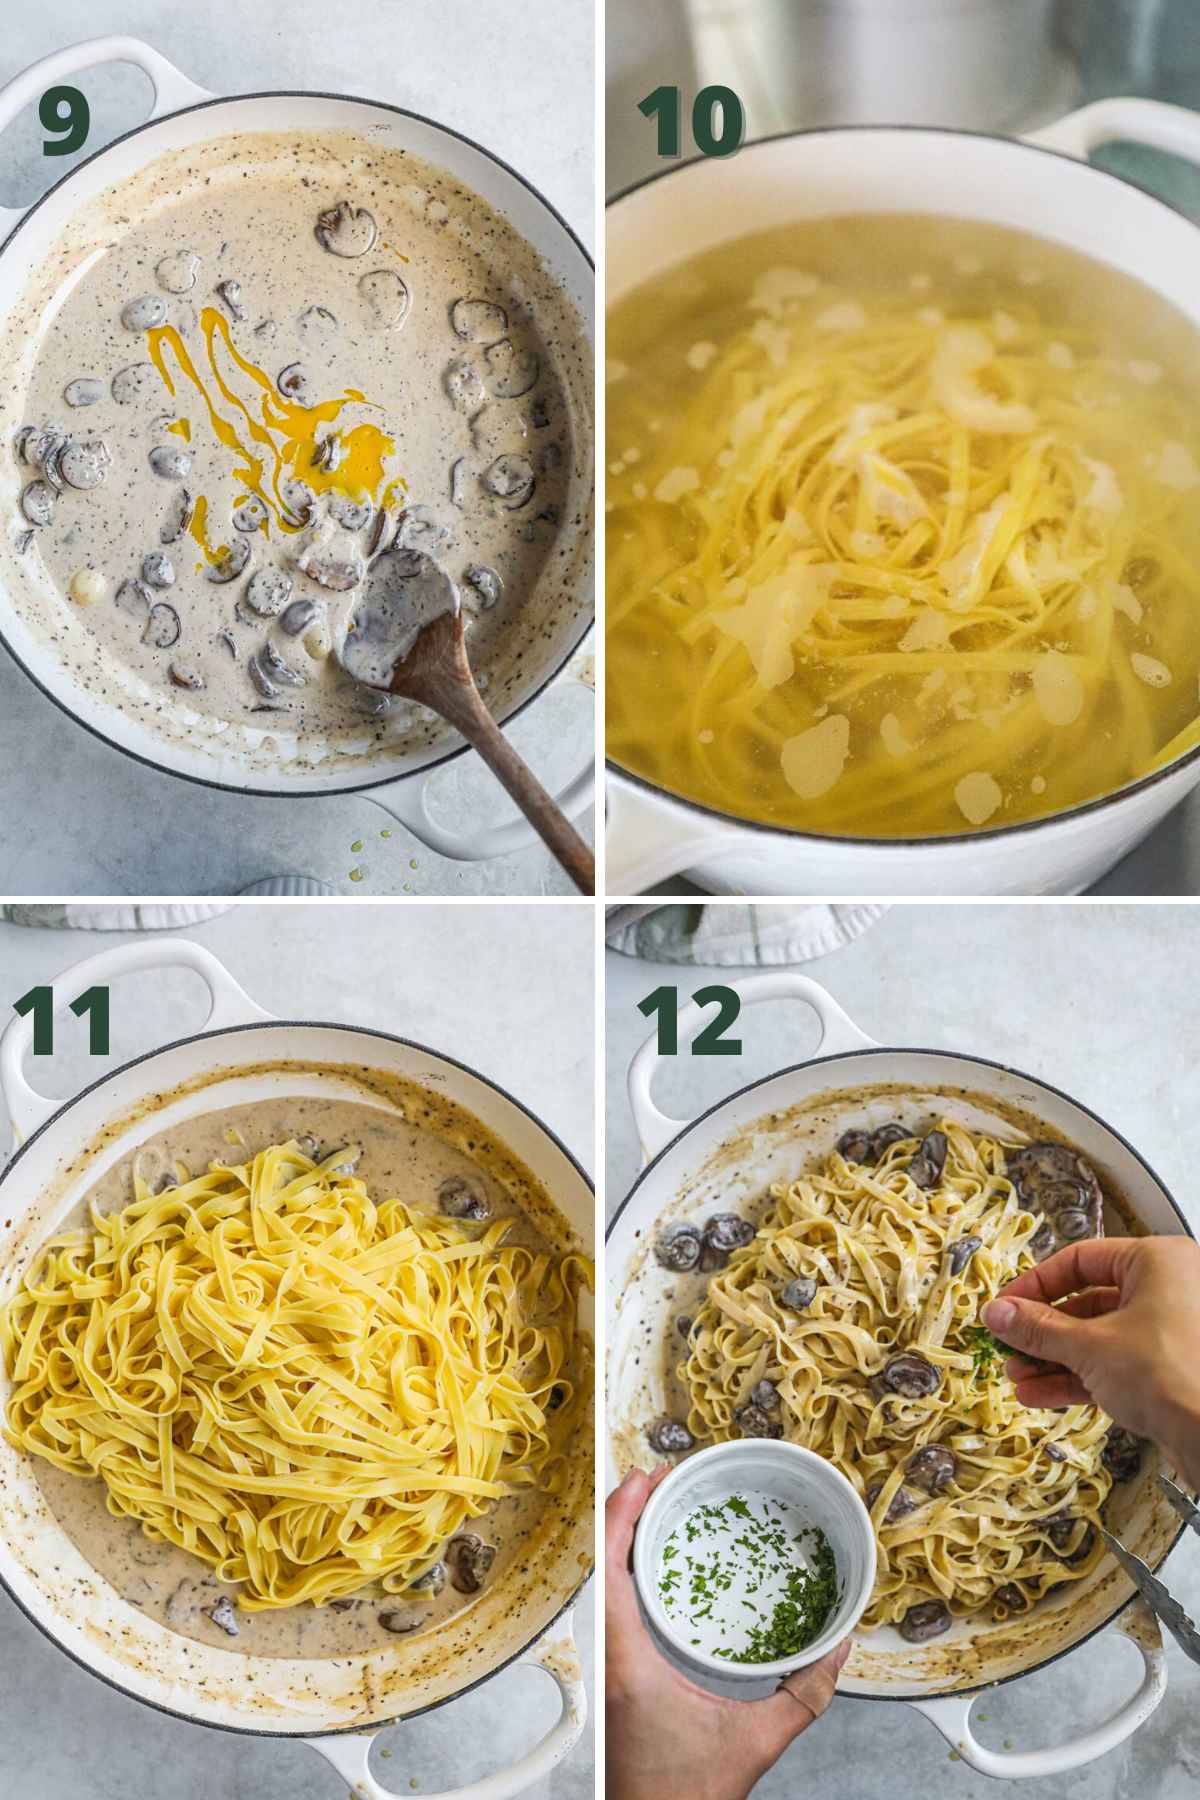 Steps to make black truffle mushroom pasta, stir in egg yolk, cook pasta, stir in pasta and pasta water, add italian parsley.